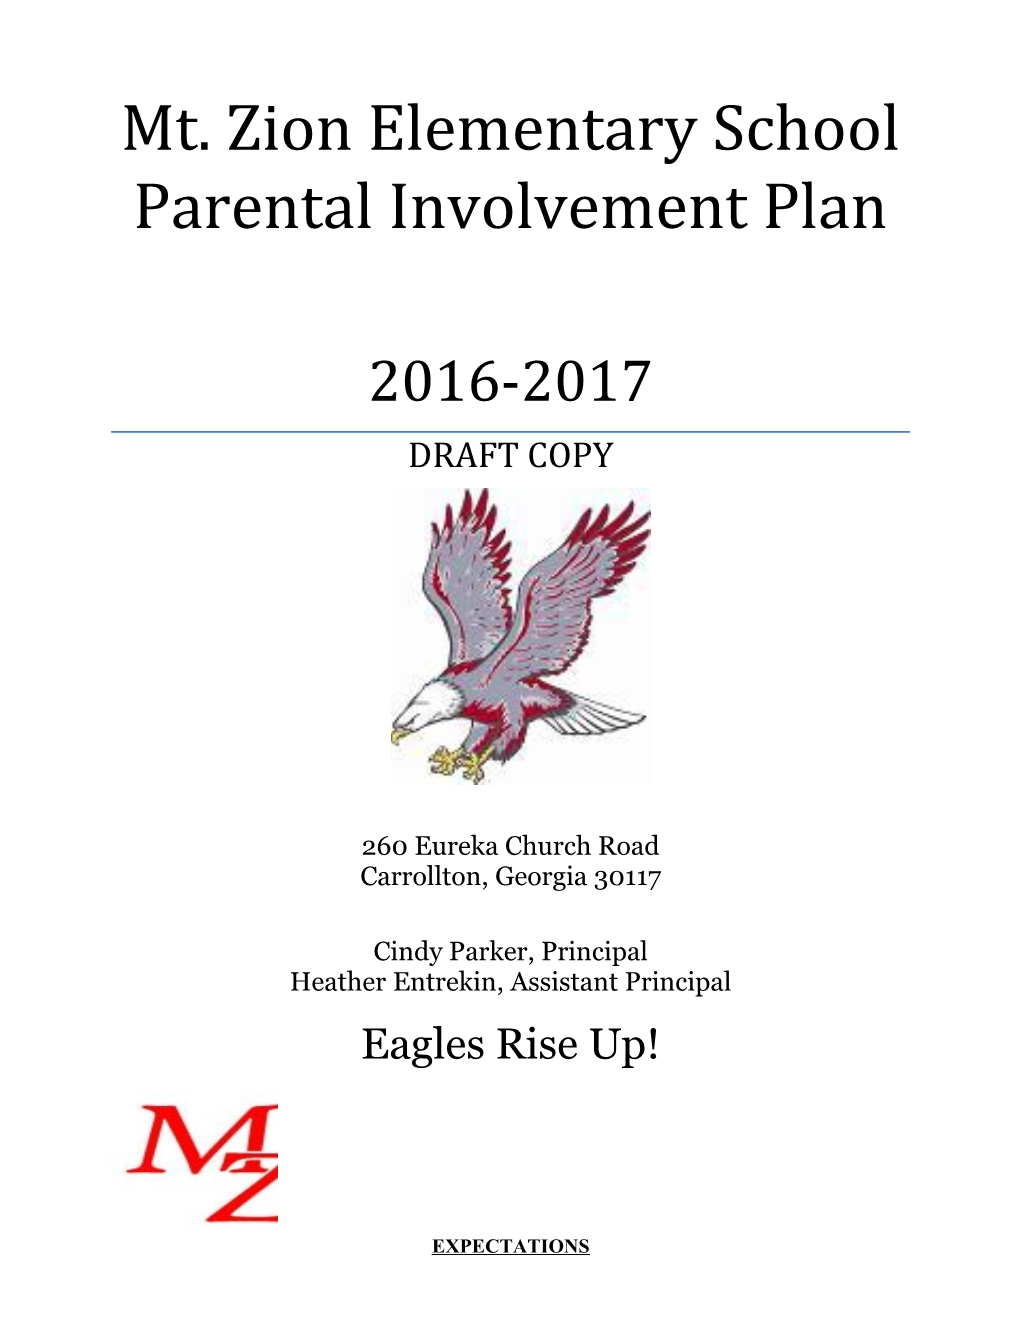 2016-2017 School Parental Involvement Policy